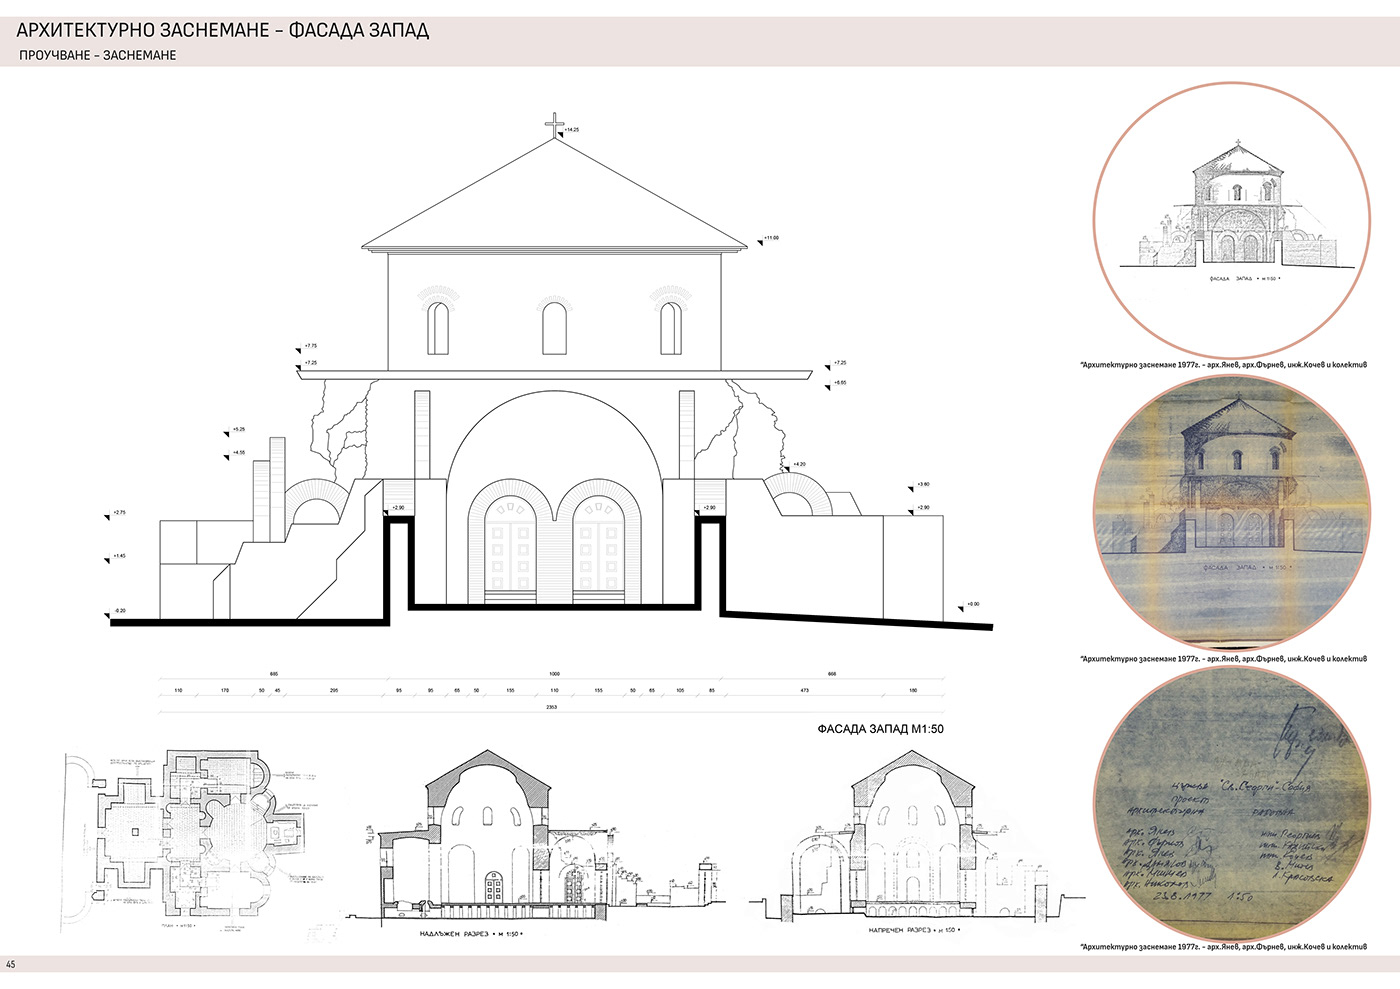 Adaptation architecture conceptual conservation design detail heritage landscaping restoration ruins